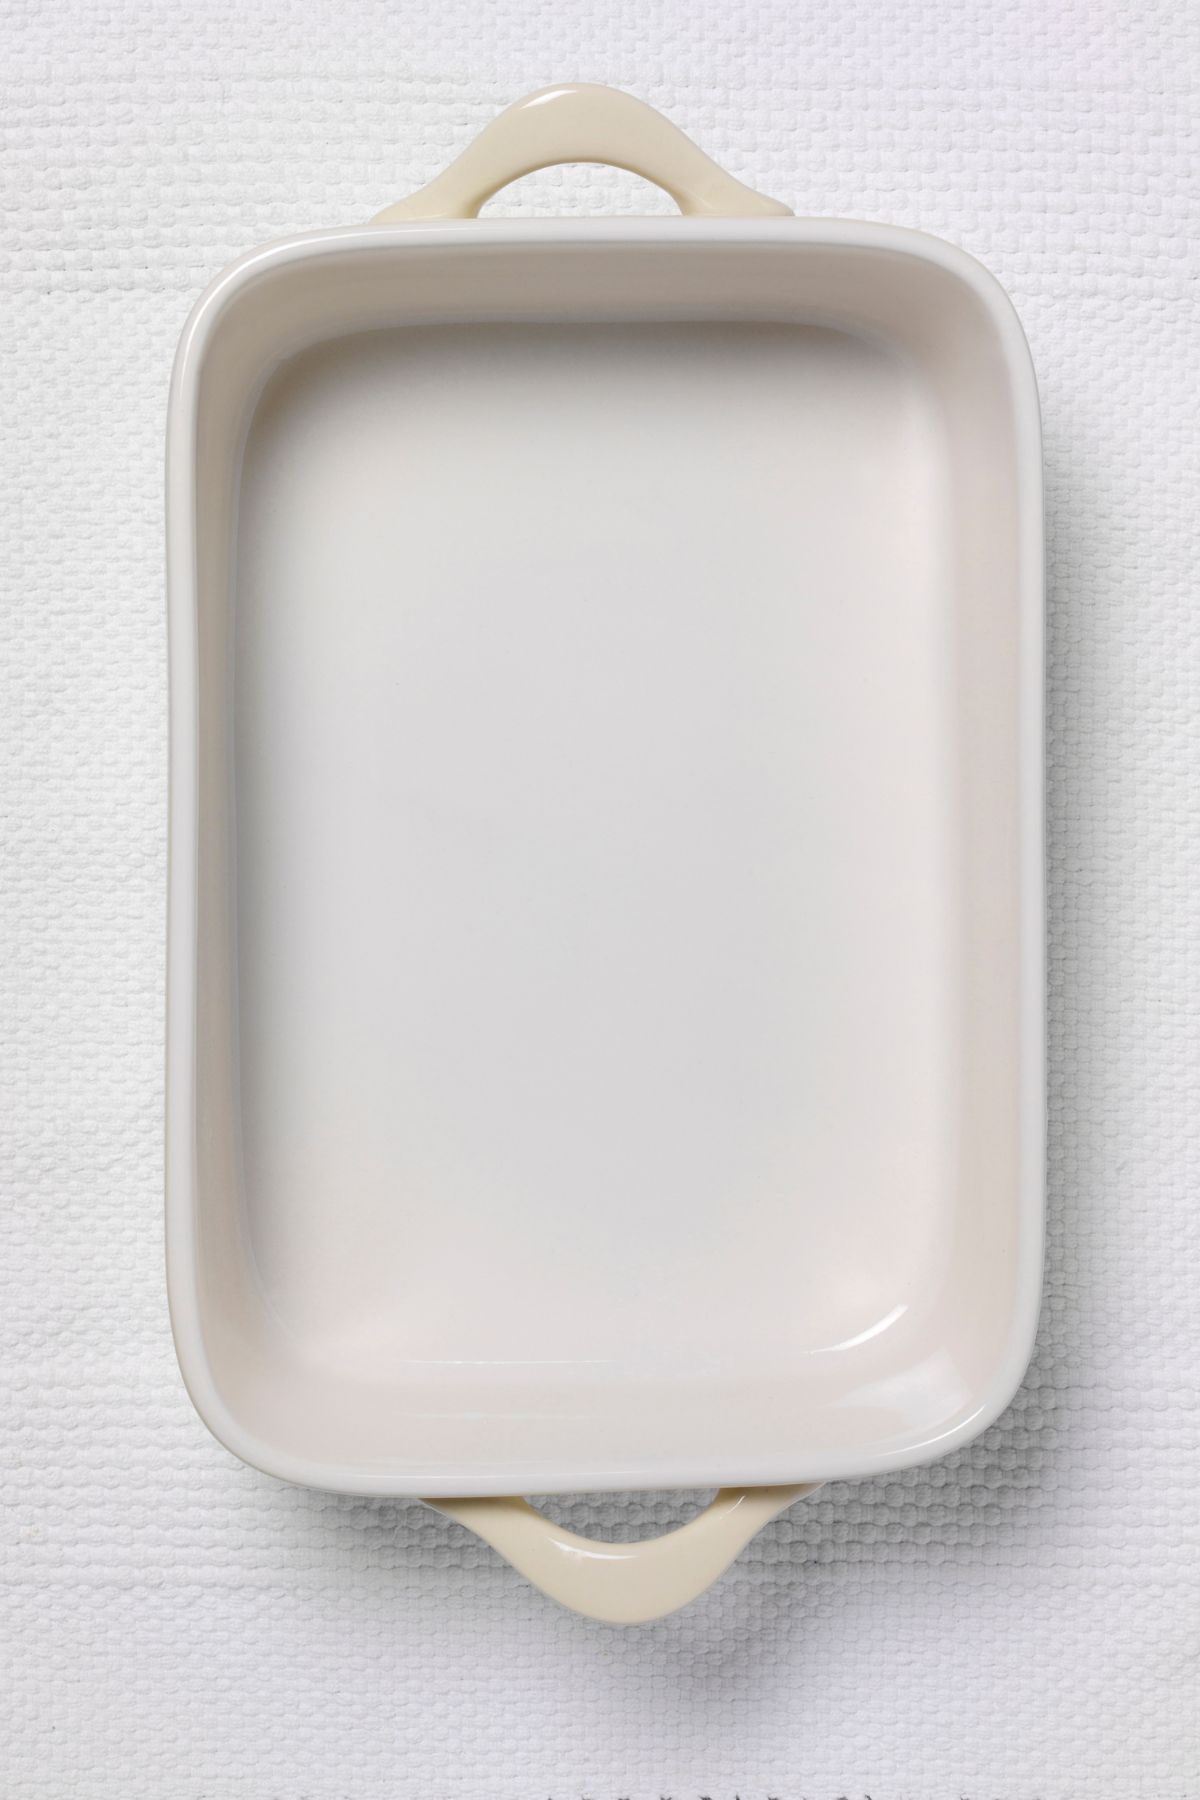 empty white 9x13 casserole dish (3 quart) with handles